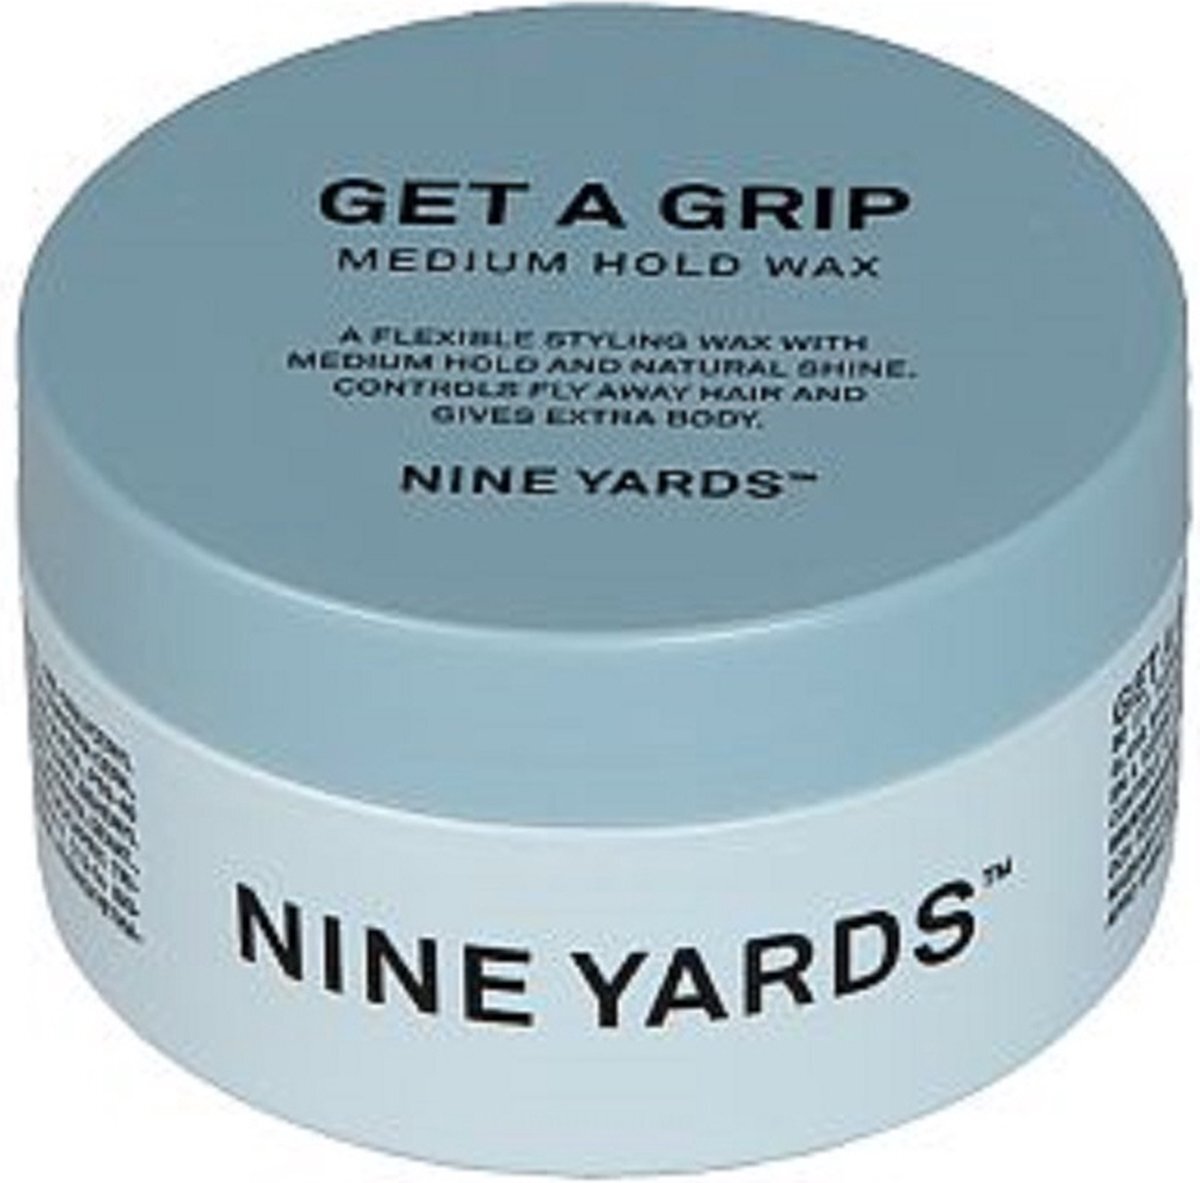 Nine Yards Get A Grip Medium Hold Wax